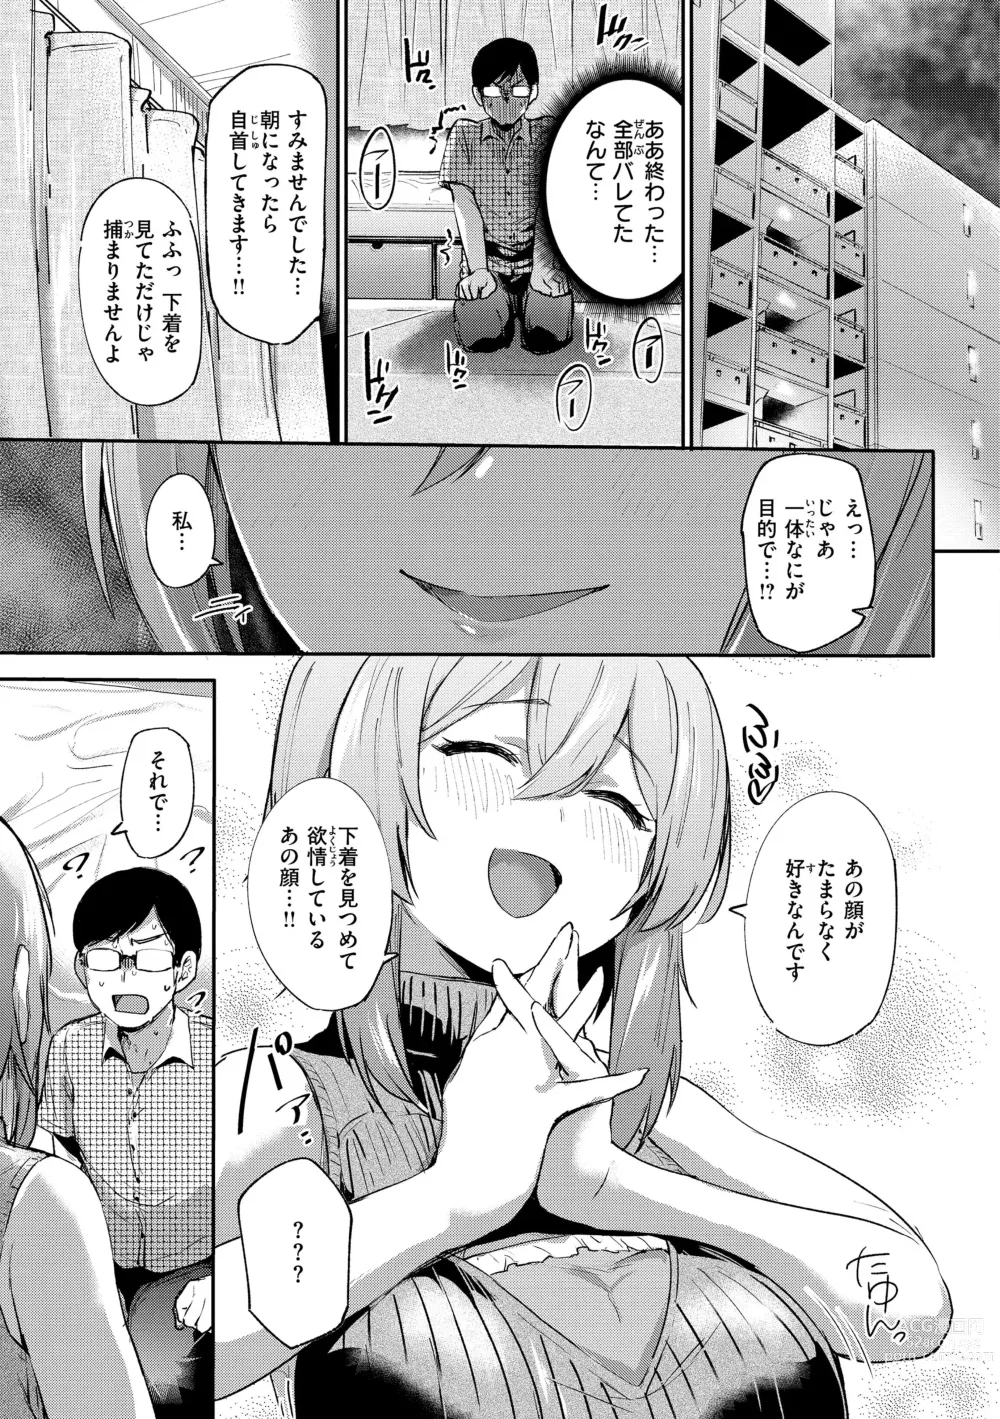 Page 9 of manga Immoral Mine